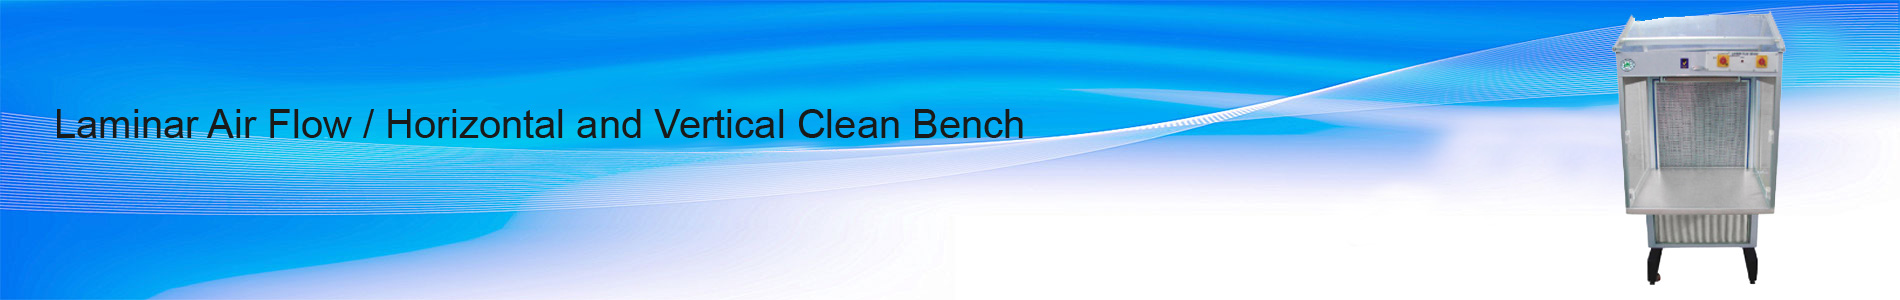 Laminar Air Flow Horizontal and Vertical Clean Bench